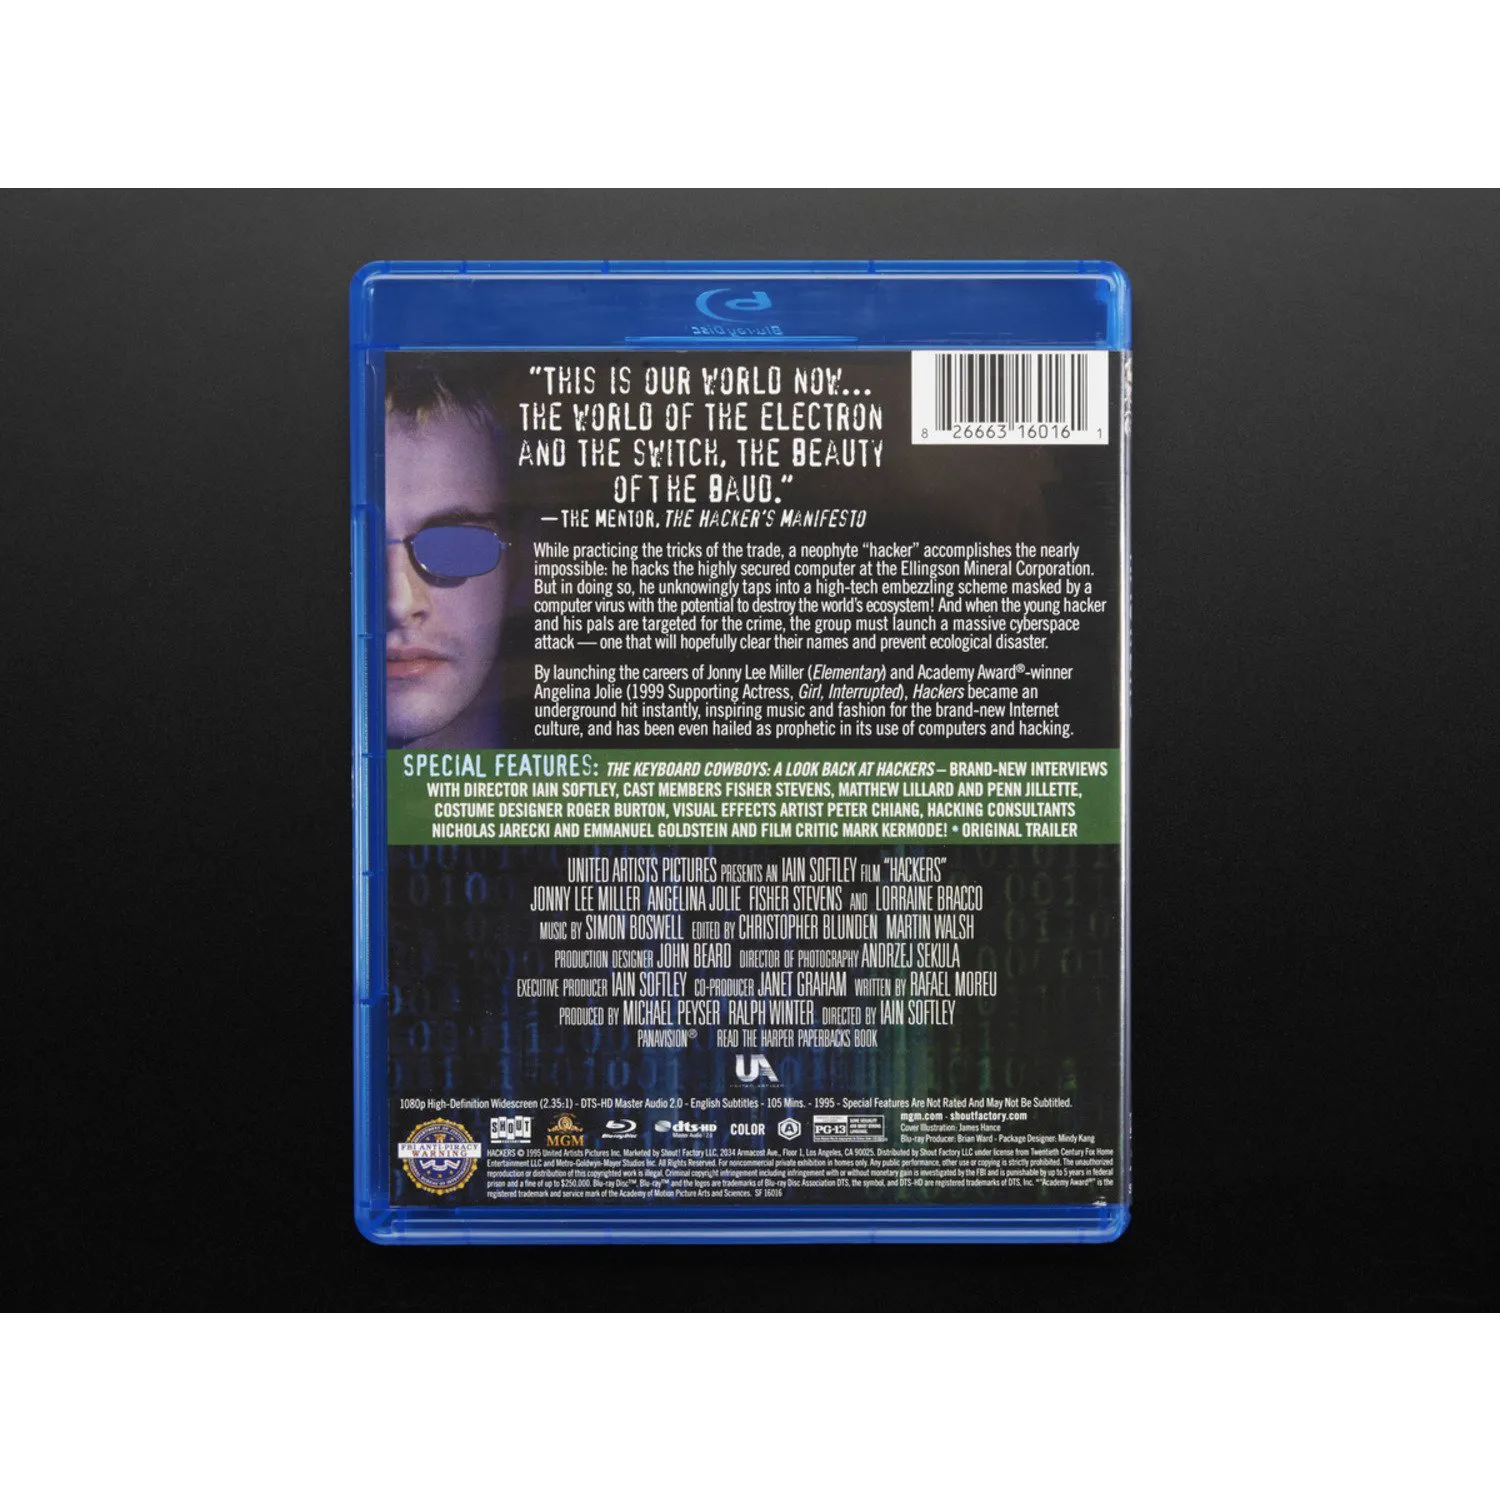 Photo of Hackers Blu-ray - 20th anniversary edition